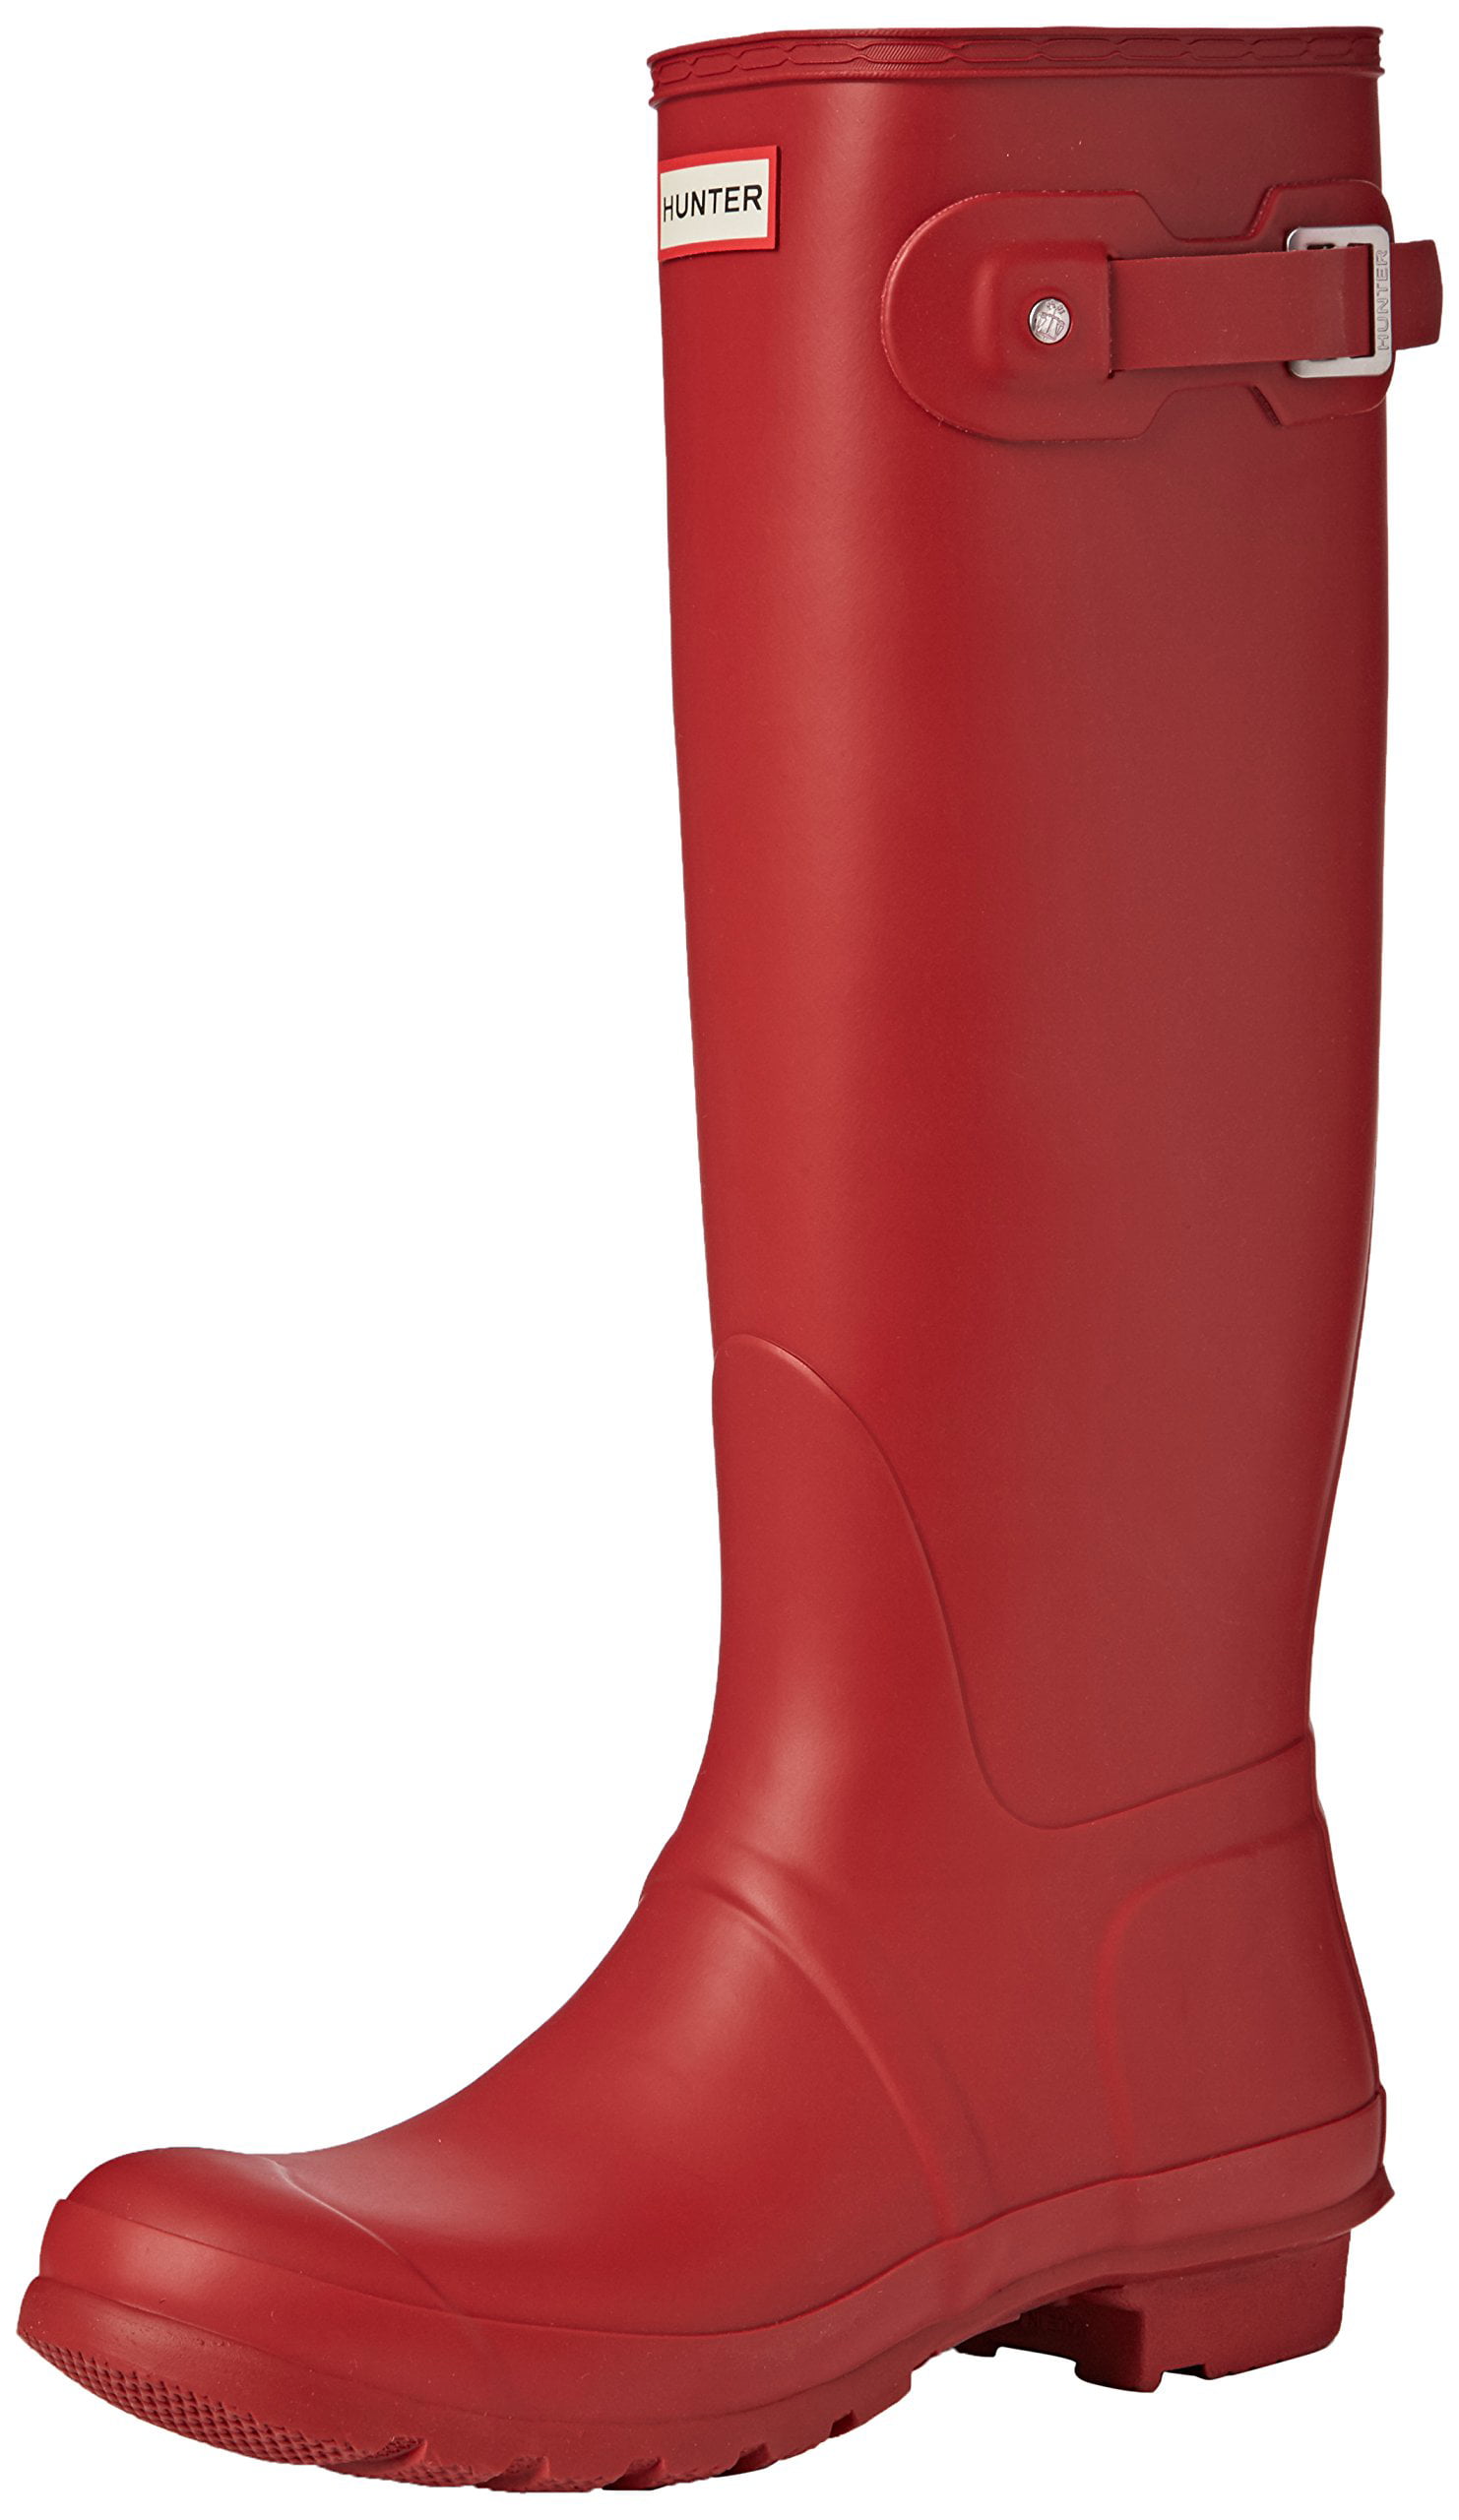 Hunter - Hunter Women's Original Tall Rain Boots - Walmart.com ...